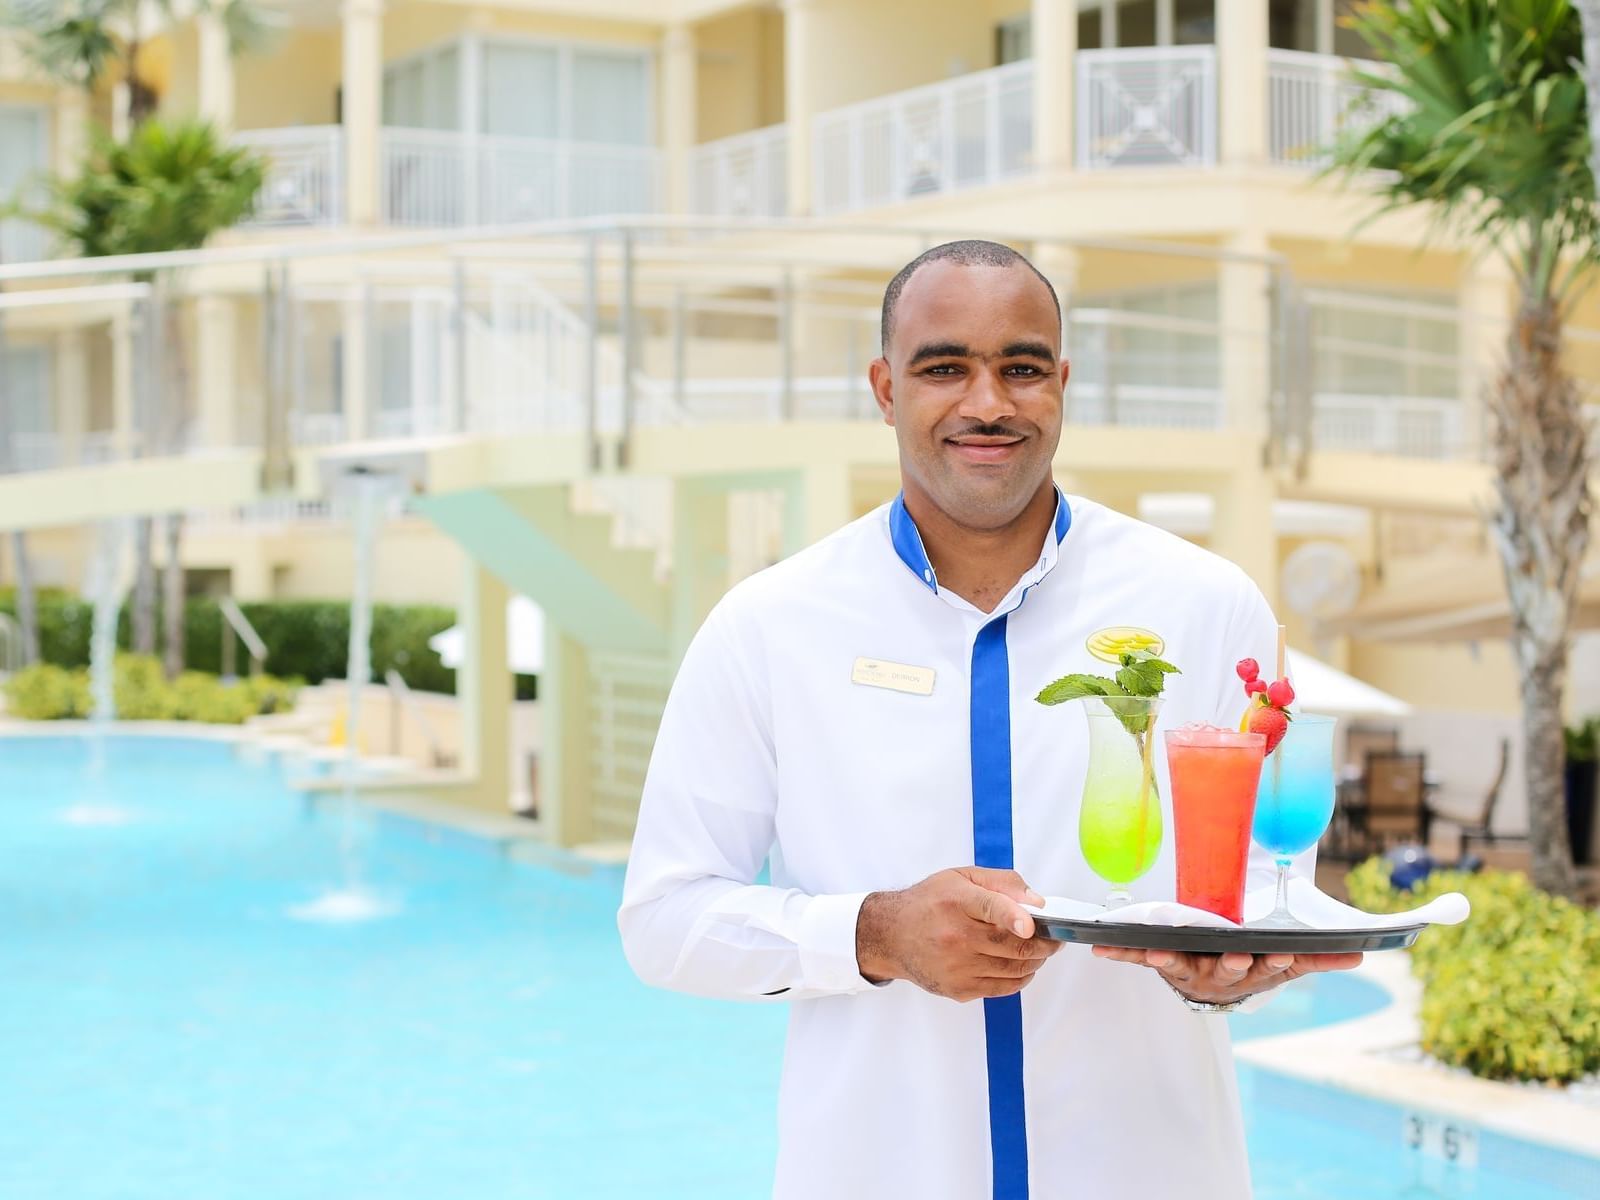 A Butler delivering drinks at Windsong Resort On The Reef